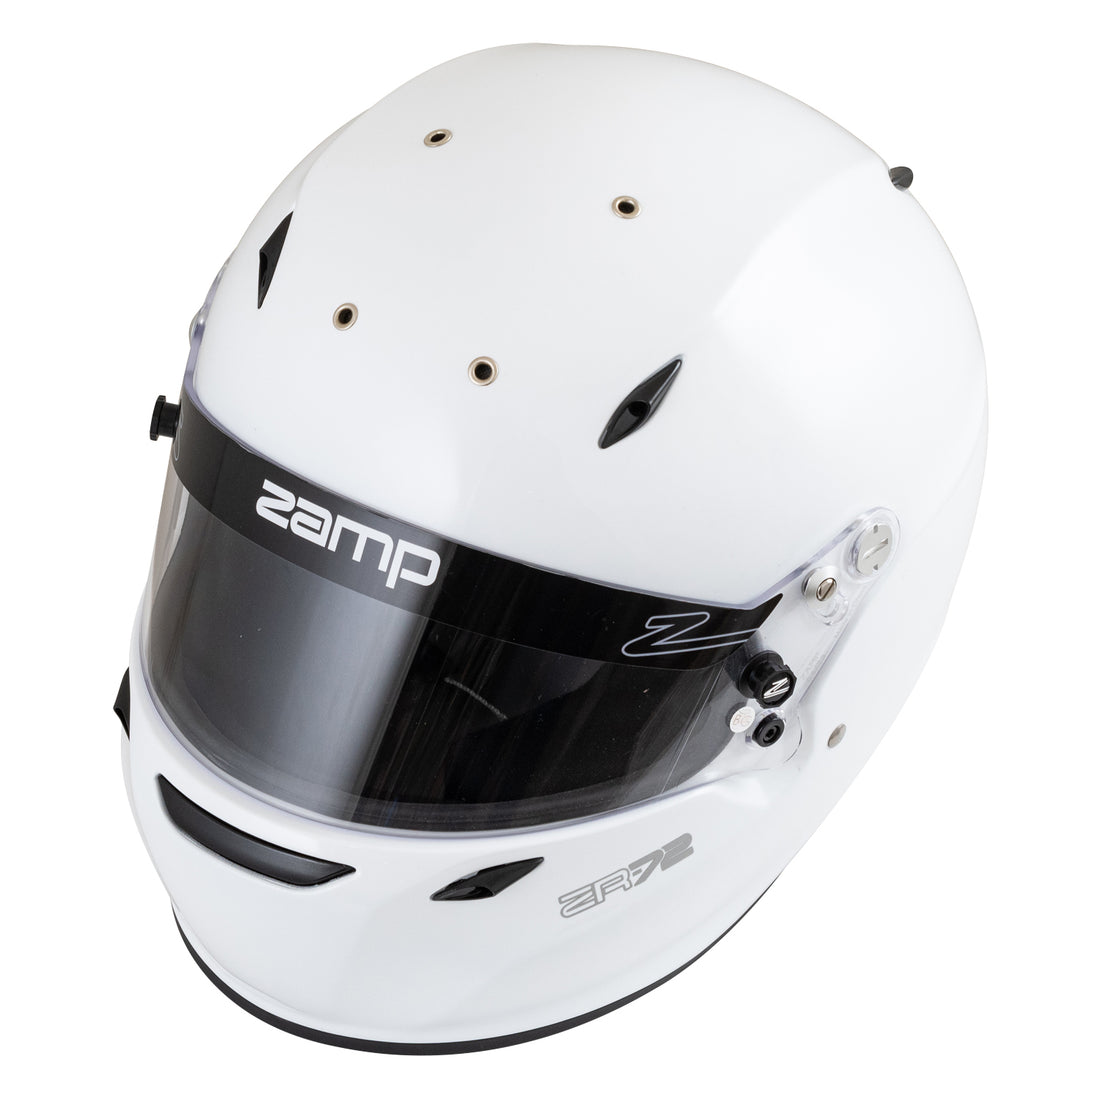 Zamp ZR-72 White Helmet